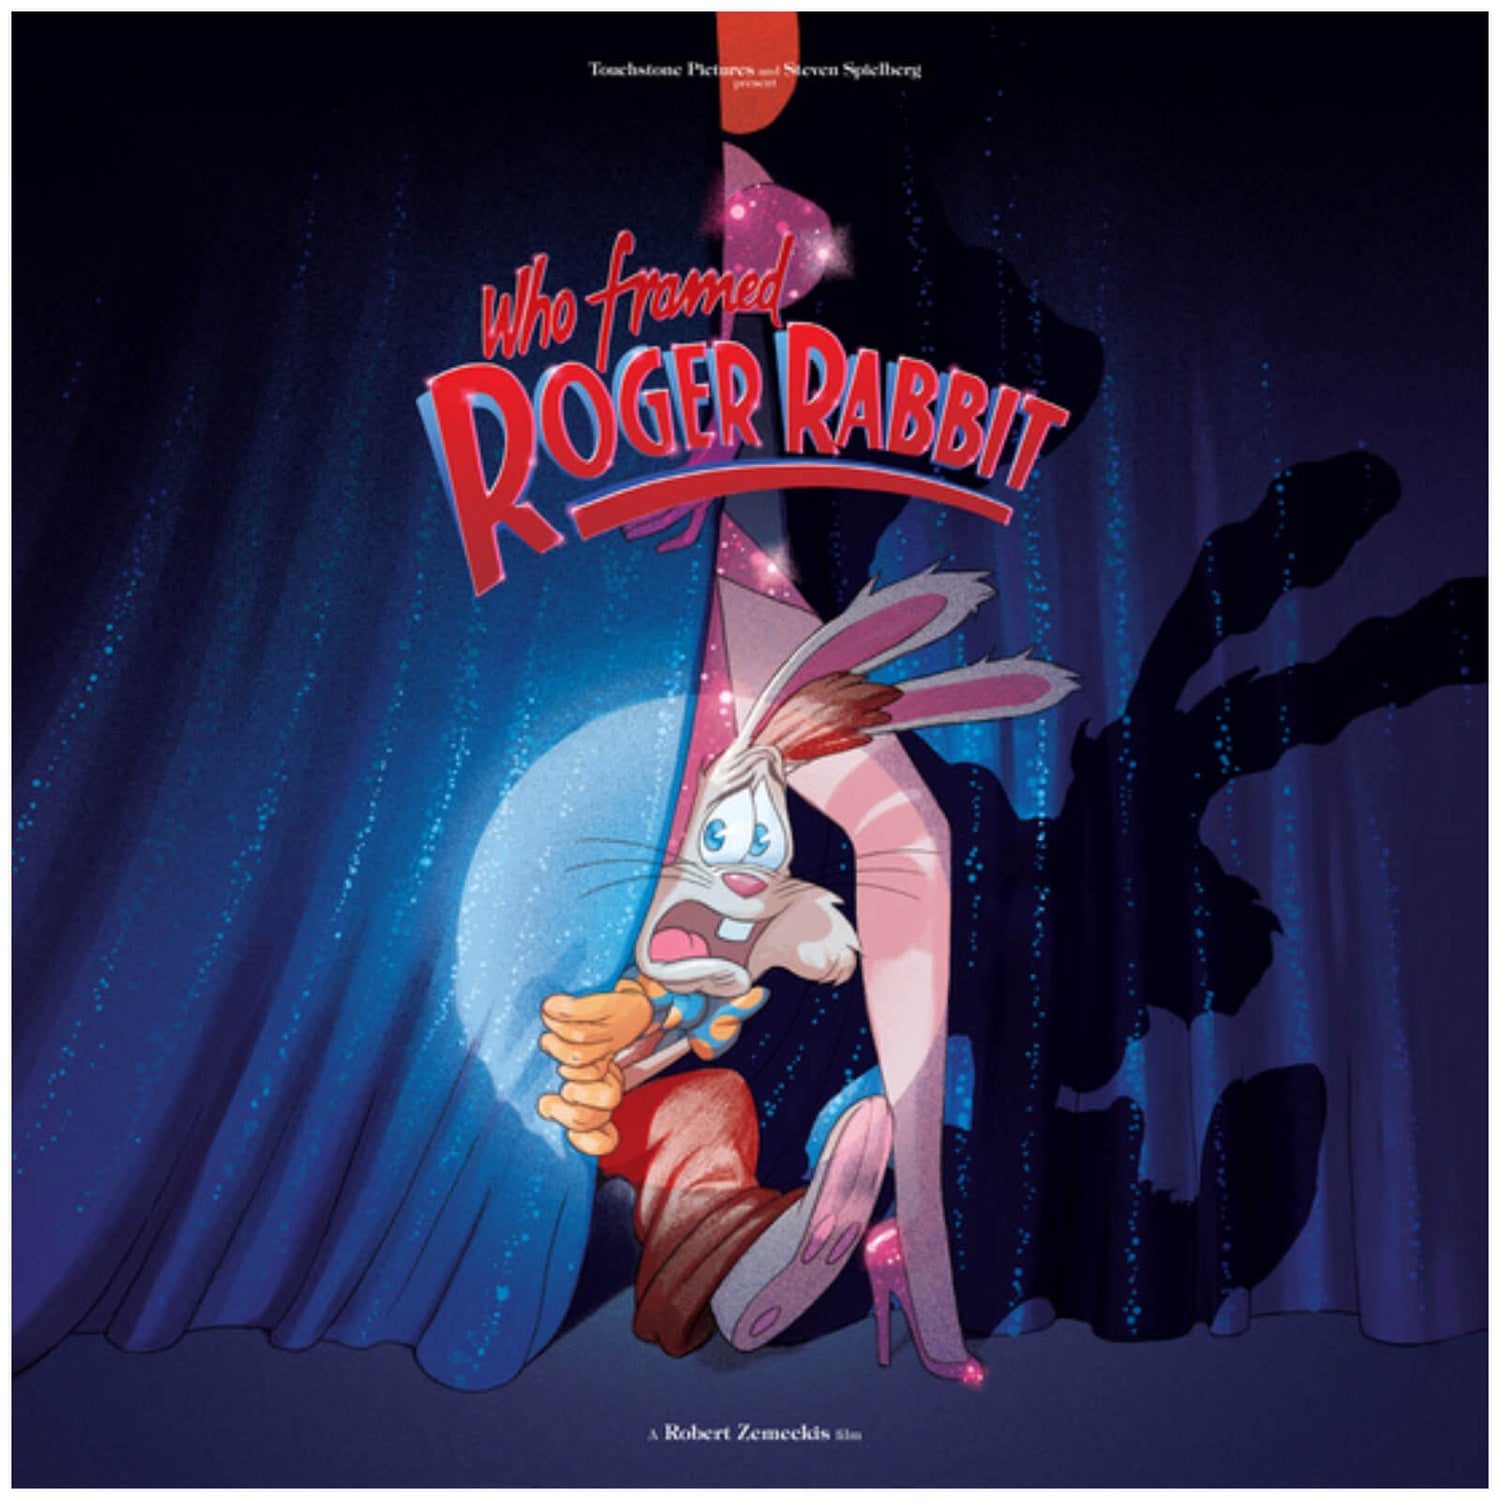 Mondo - Who Framed Roger Rabbit? (Original Soundtrack) 180g Vinyl